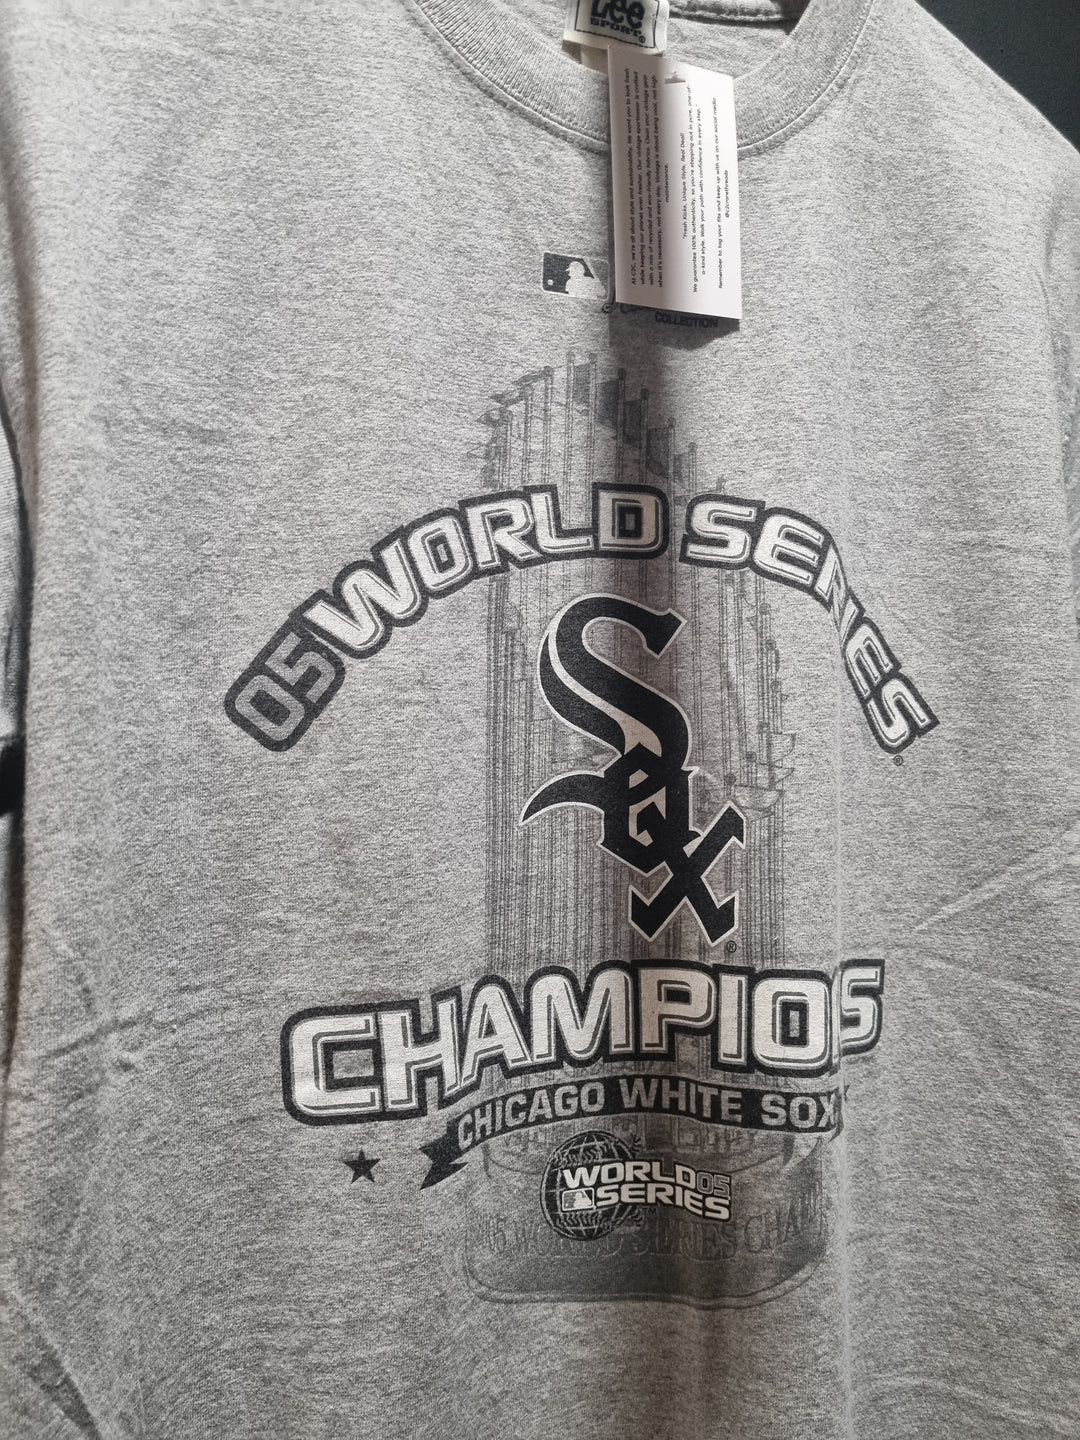 World Series Champions Chicago White Sox Medium